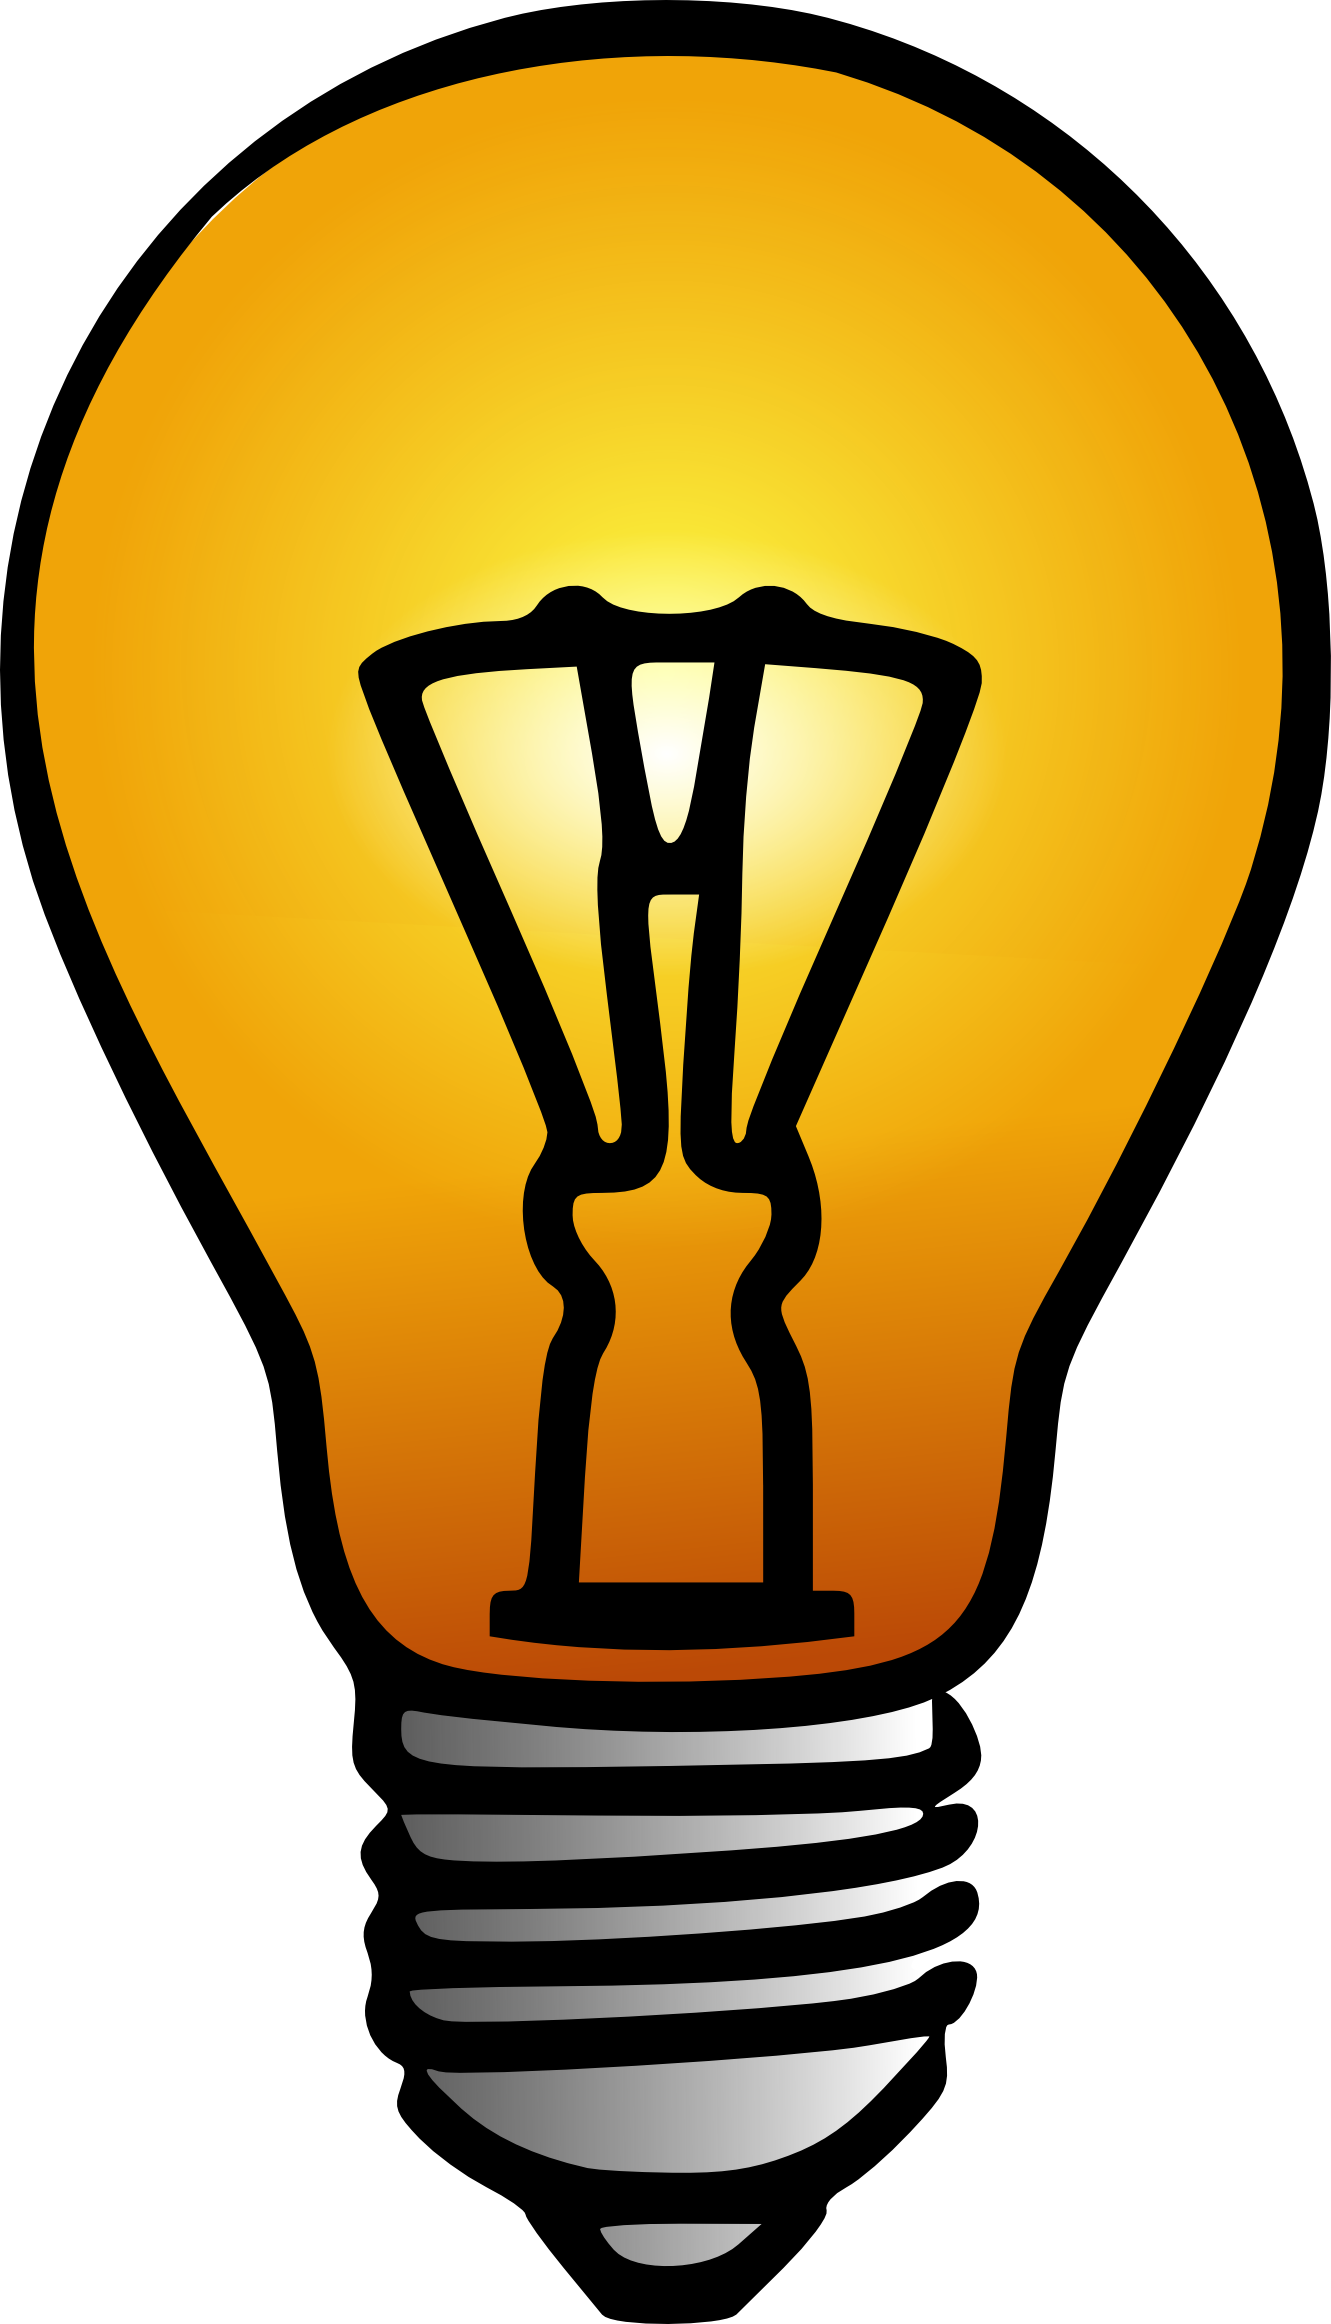 Clip Art: Light Bulb Bulb RSS openclipart.org ... - ClipArt Best ...